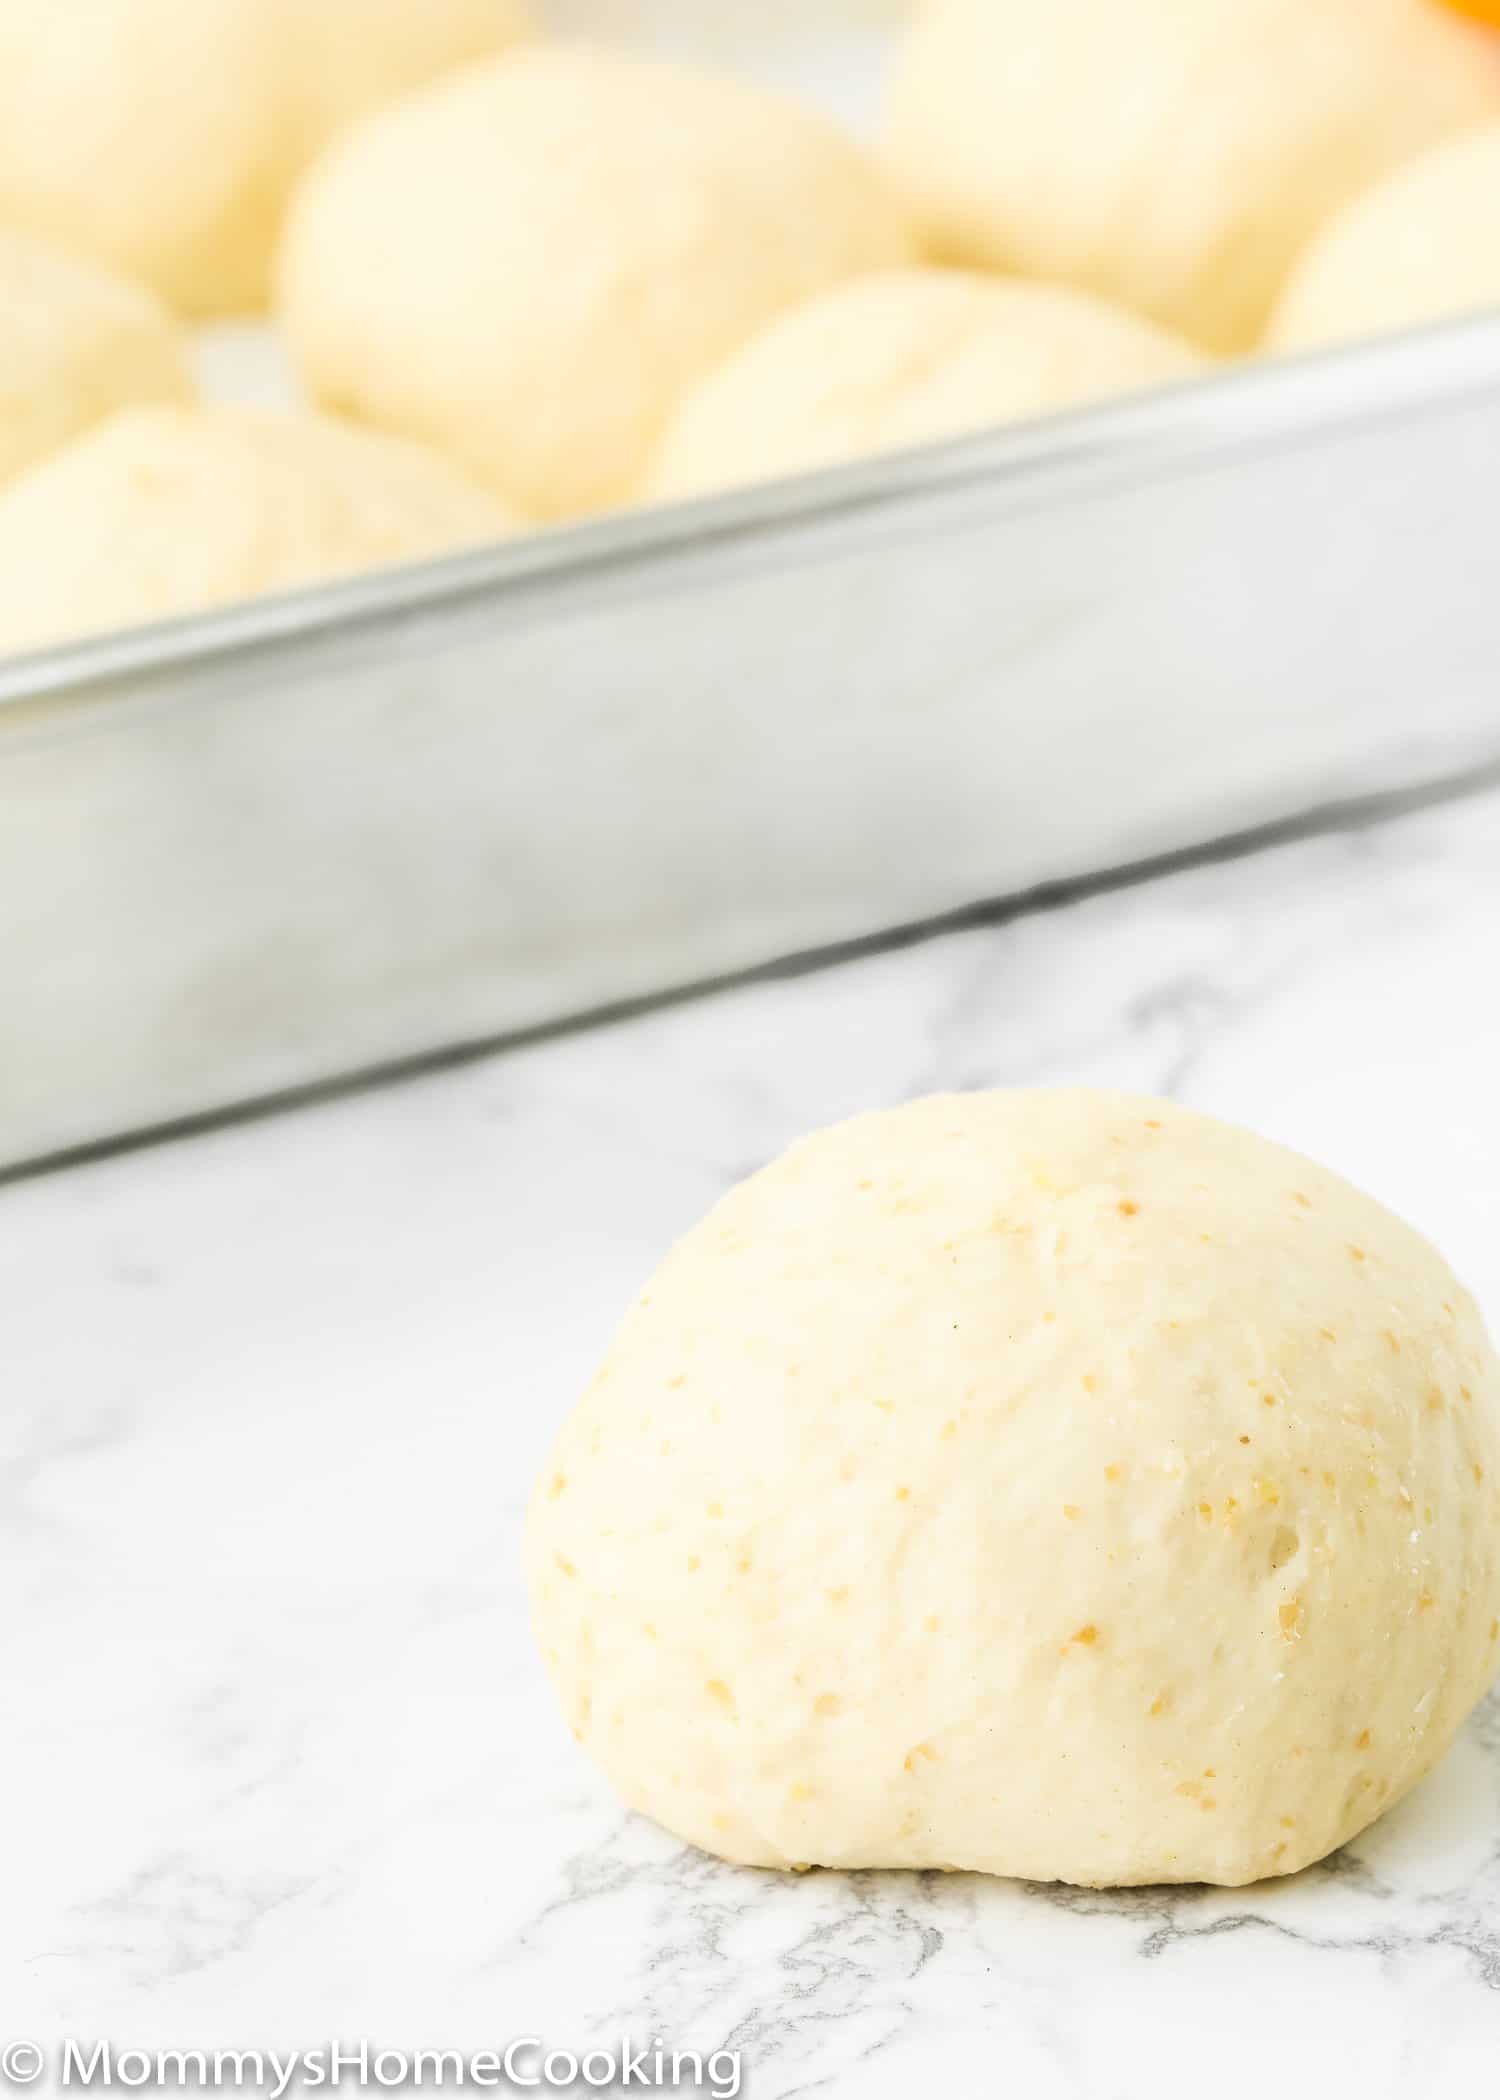 A close up of a single dough ball before baking.